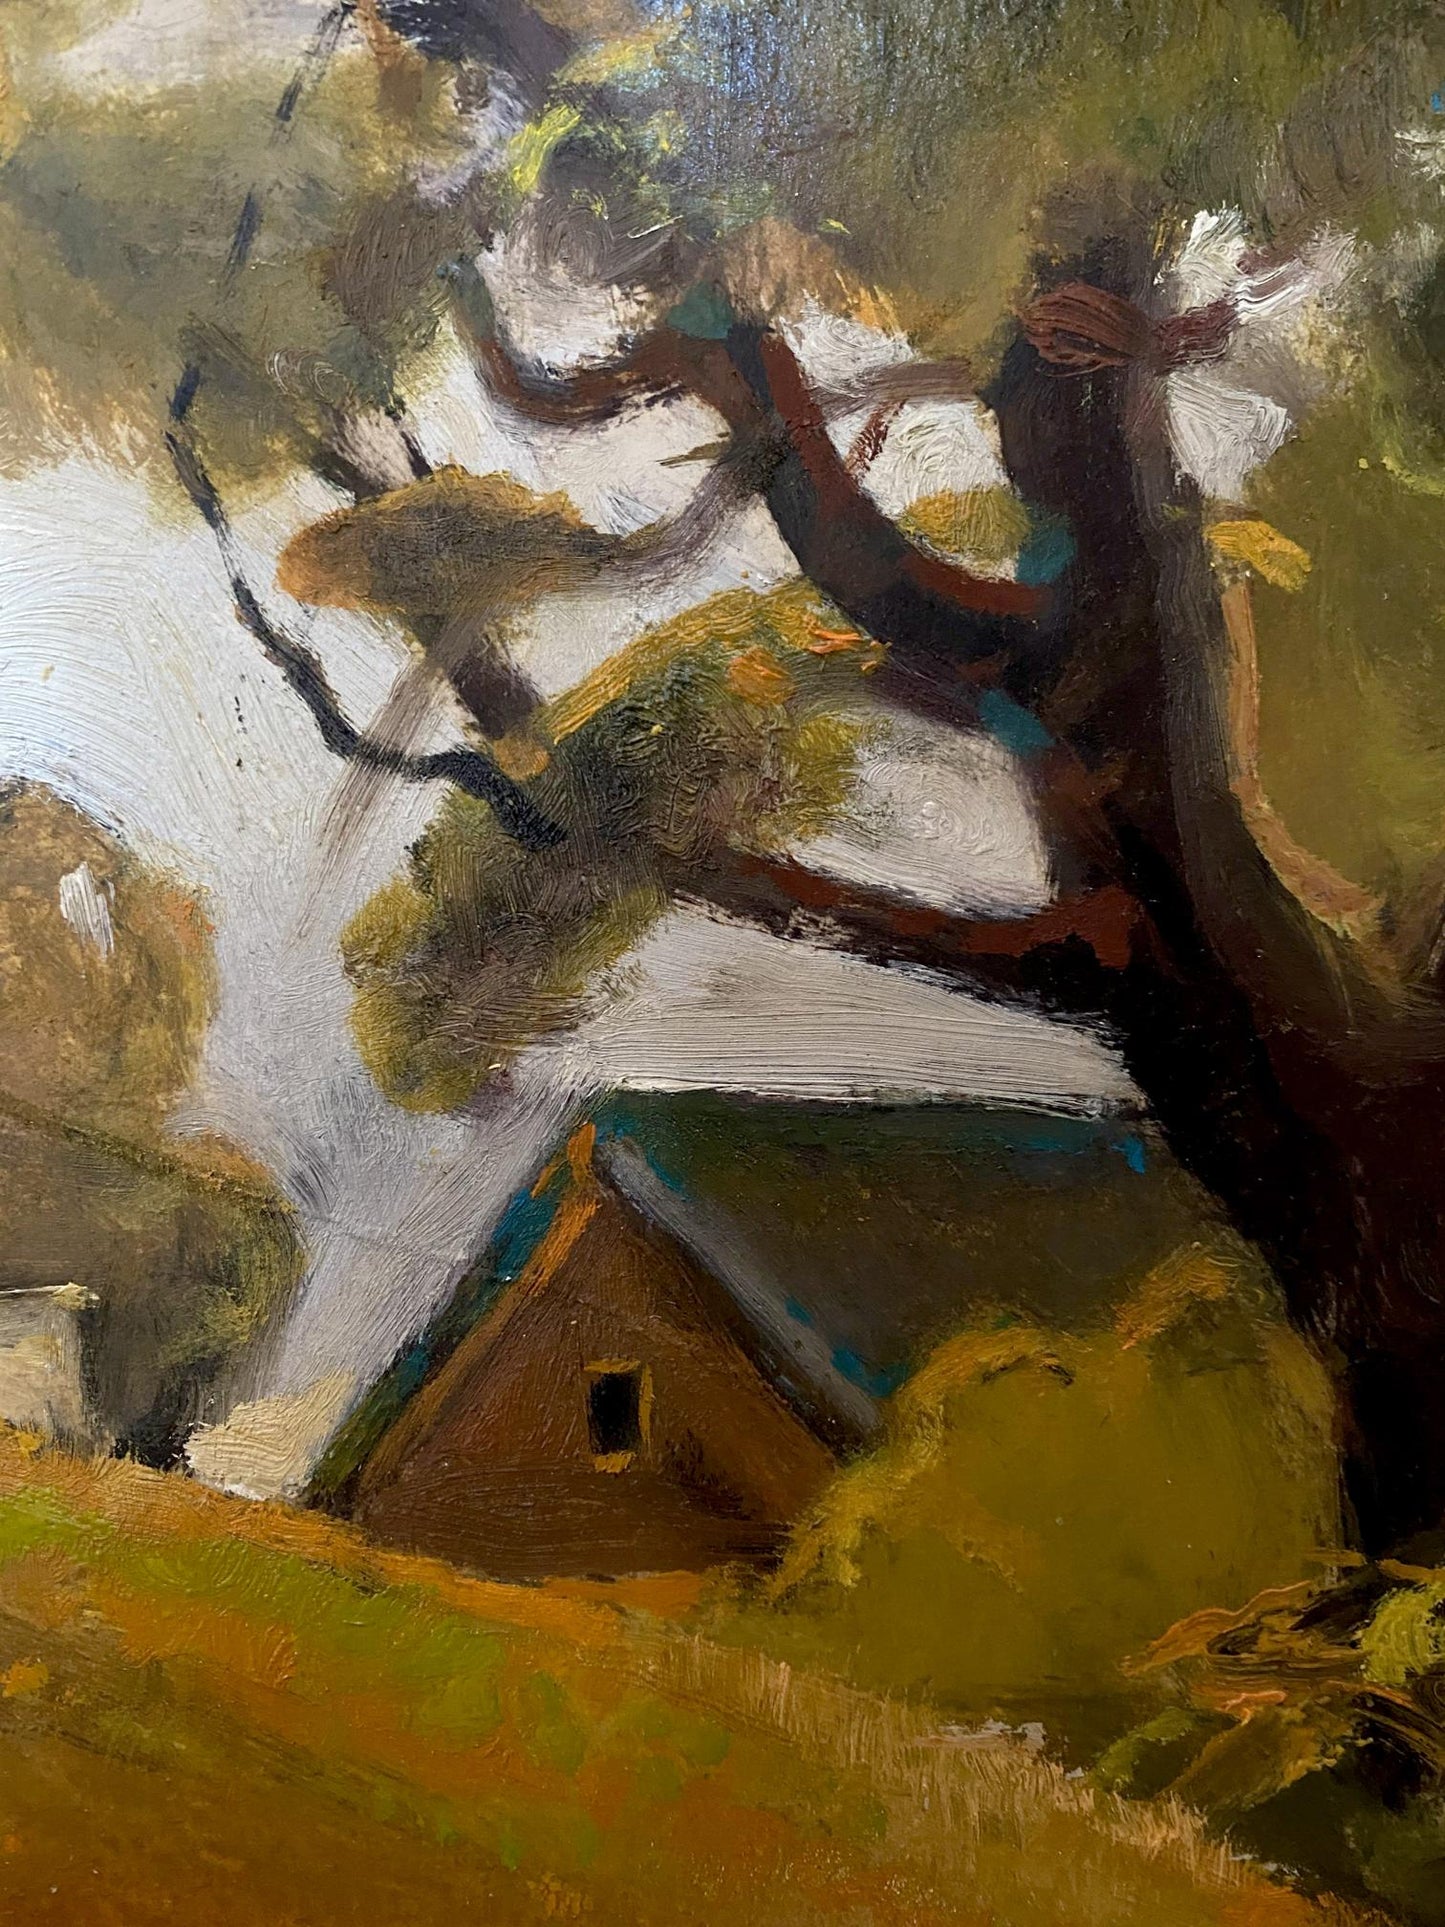 village painting